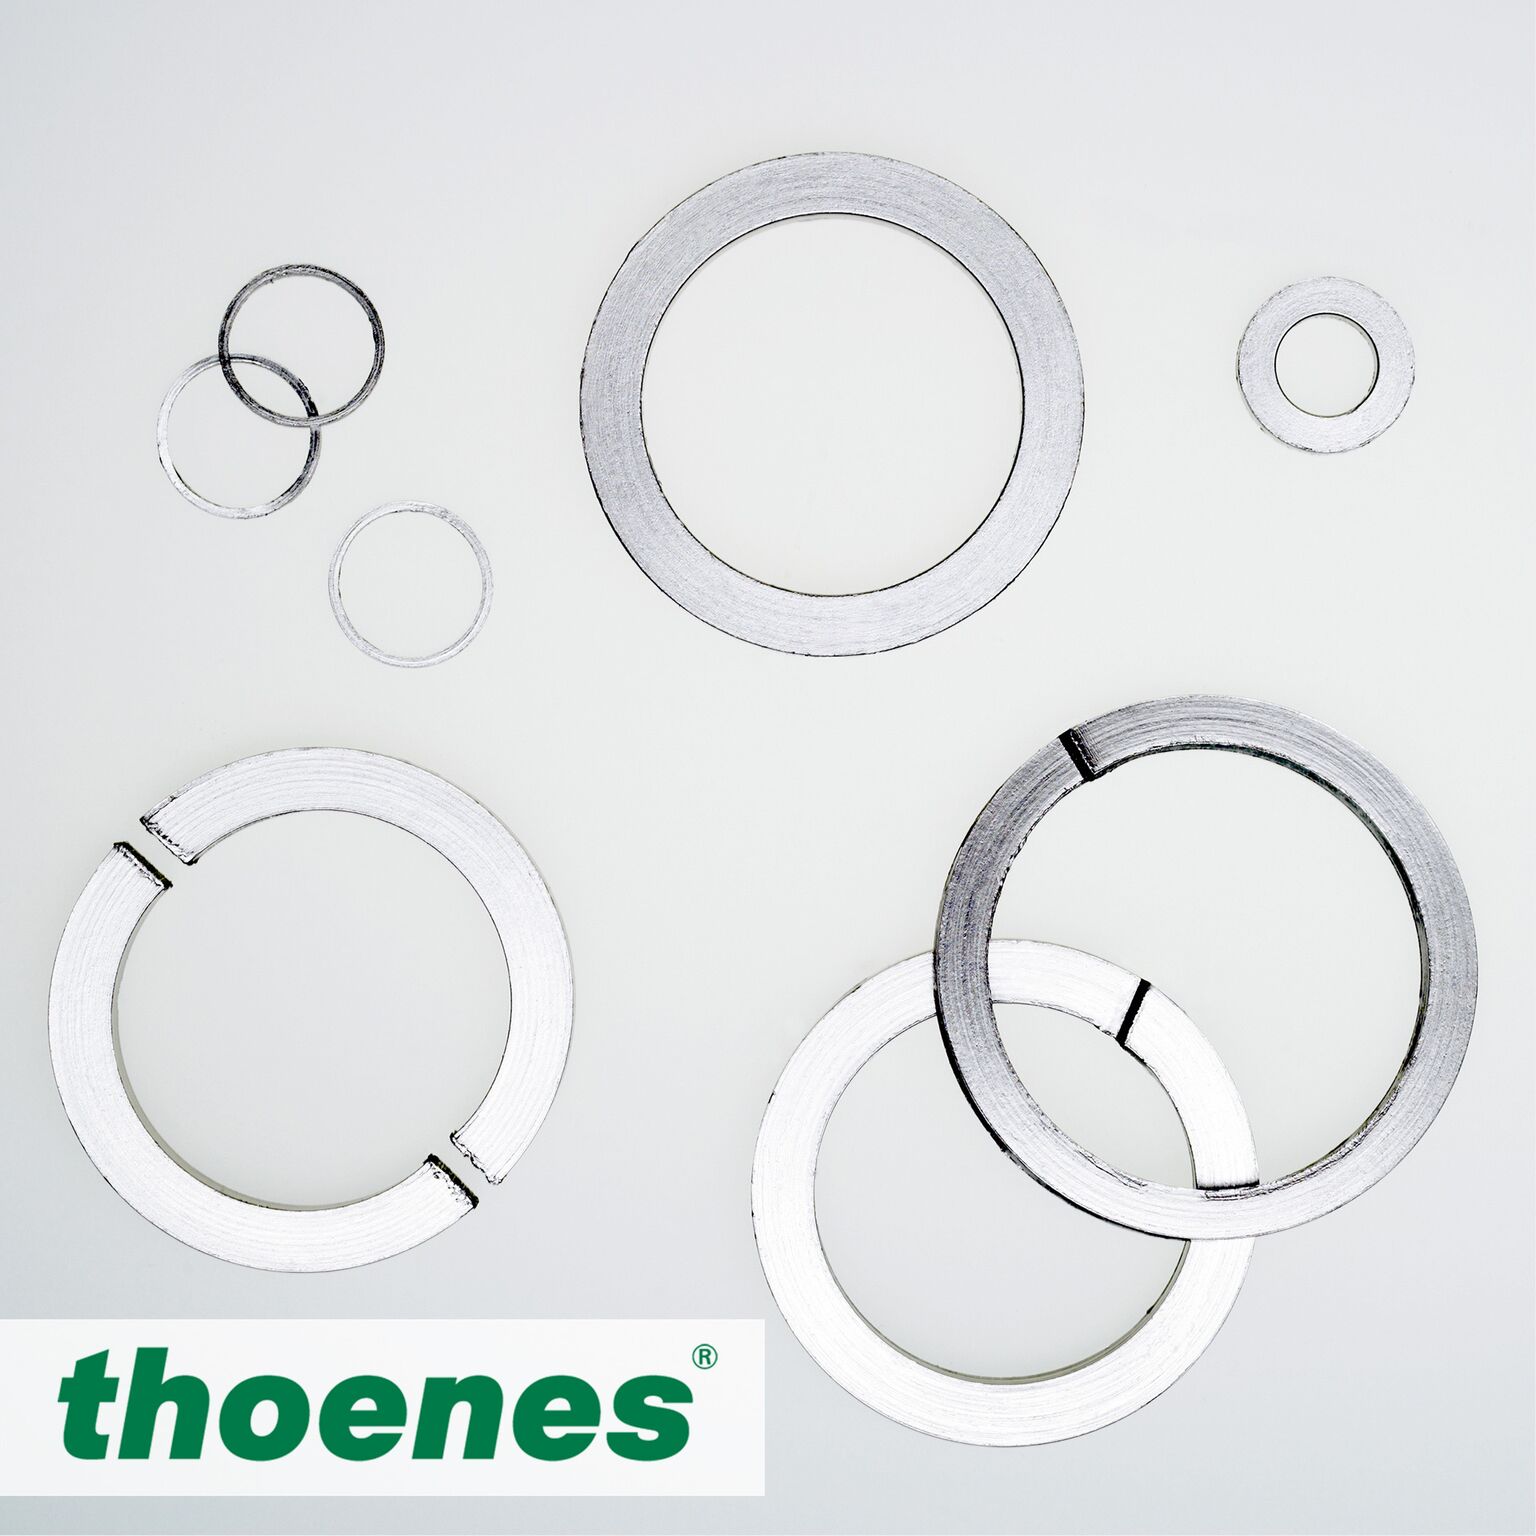 thoenes® pure graphite rings